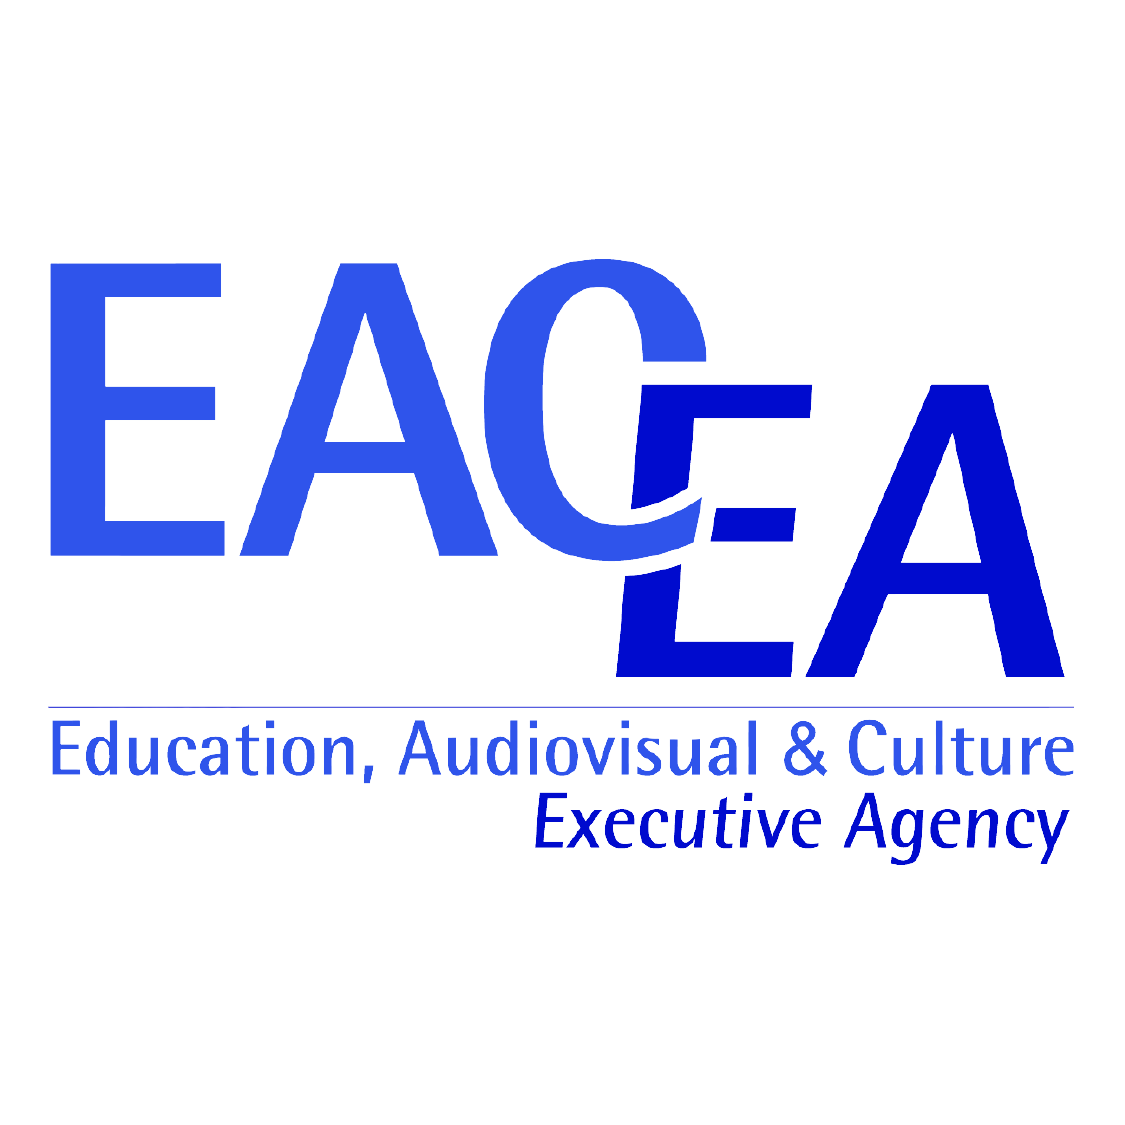 Eacea Logo